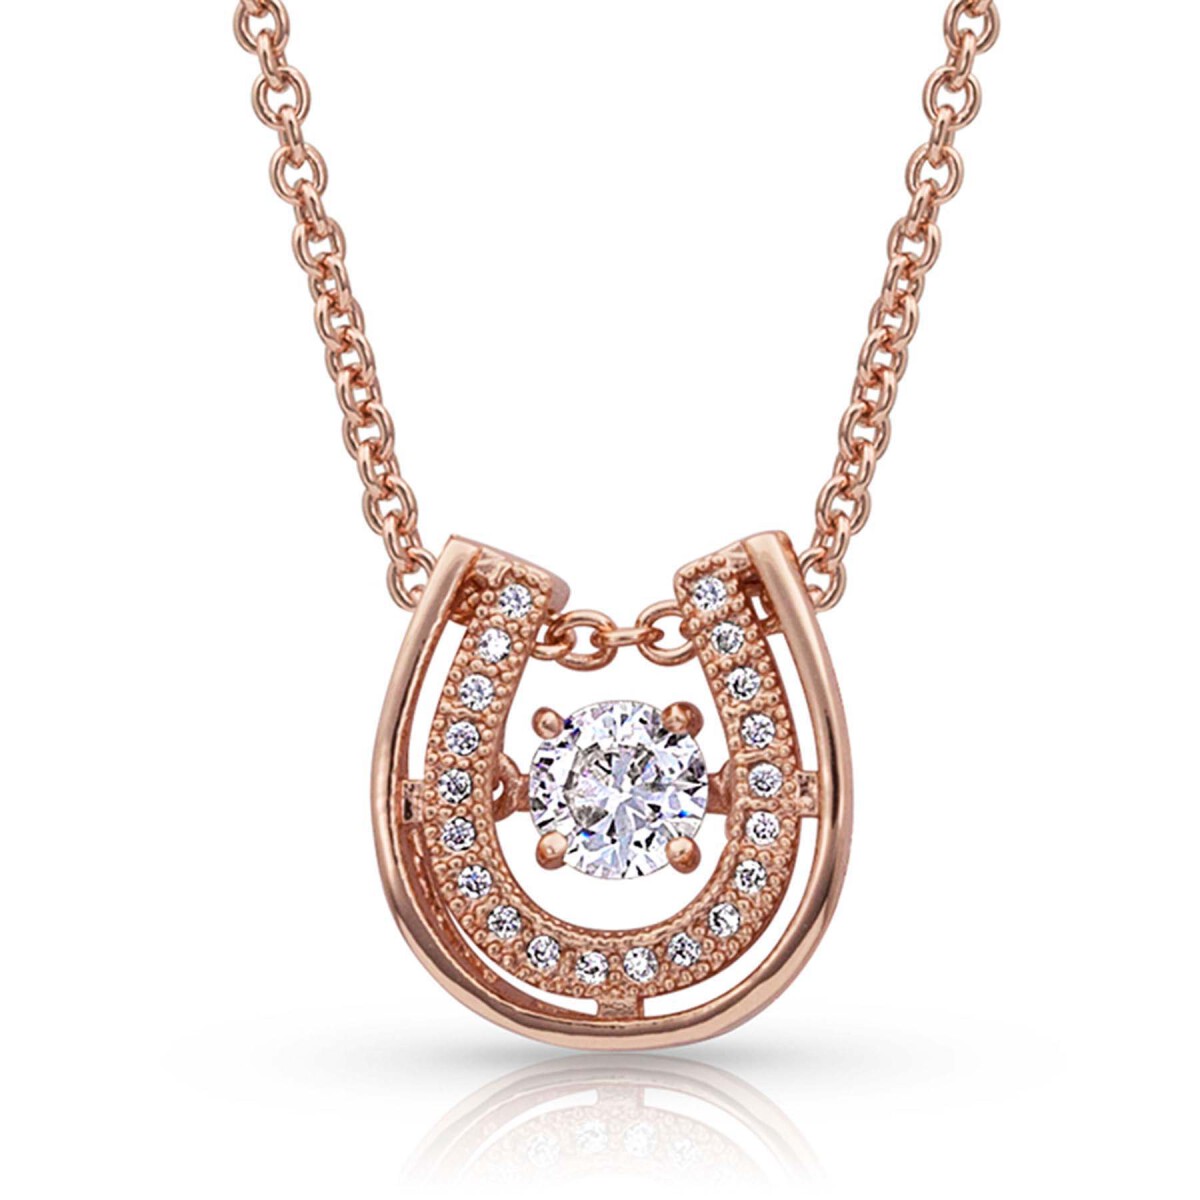 14kt white gold horseshoe necklace with diamonds. - Woodbridge Jewelery  Exchange